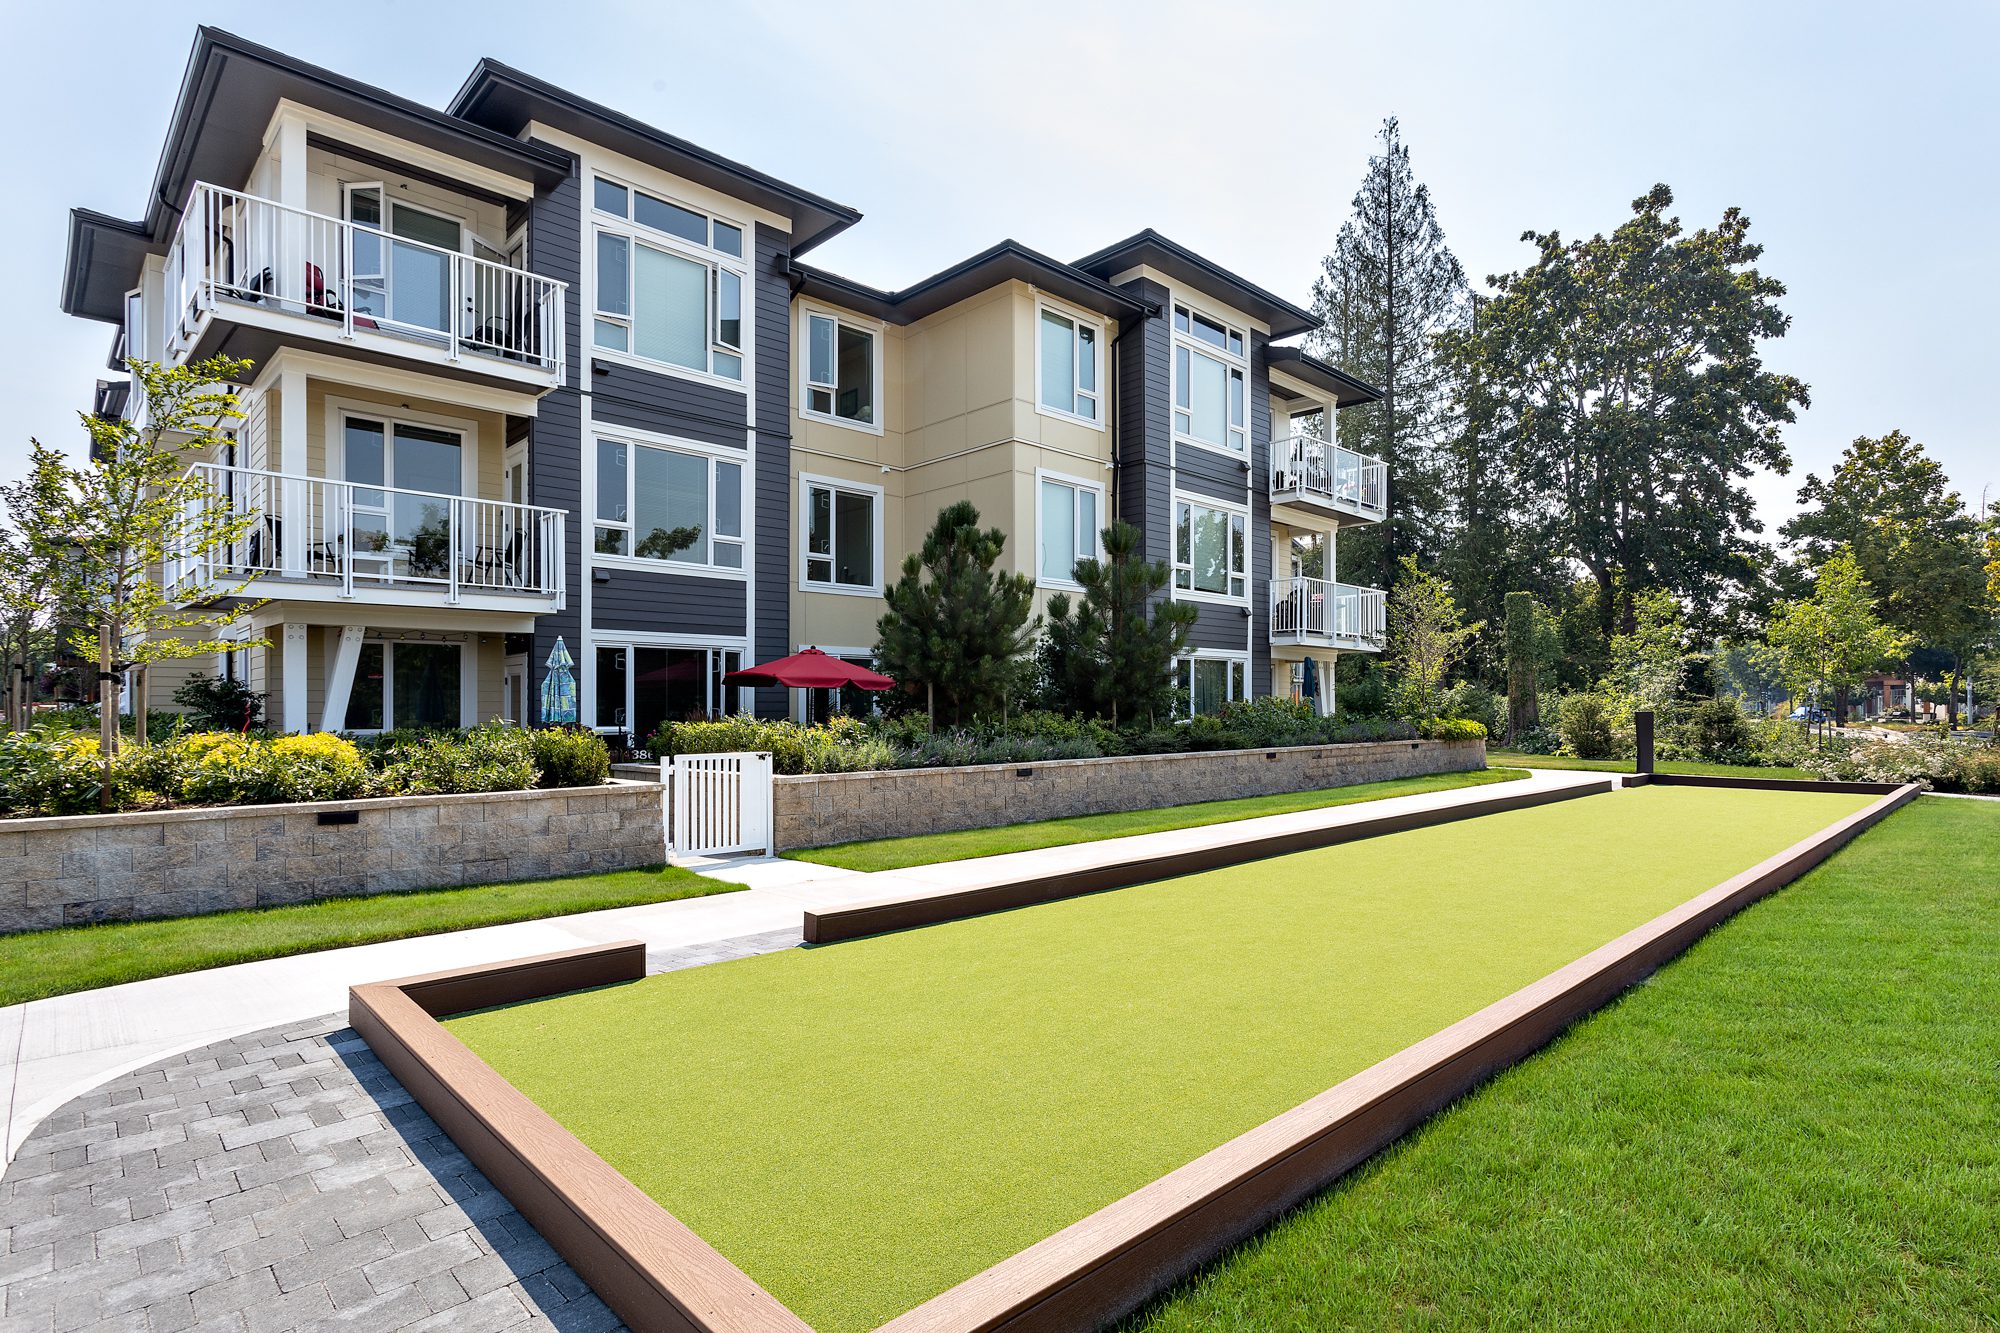 Solaro Rental Langley Home Apartment